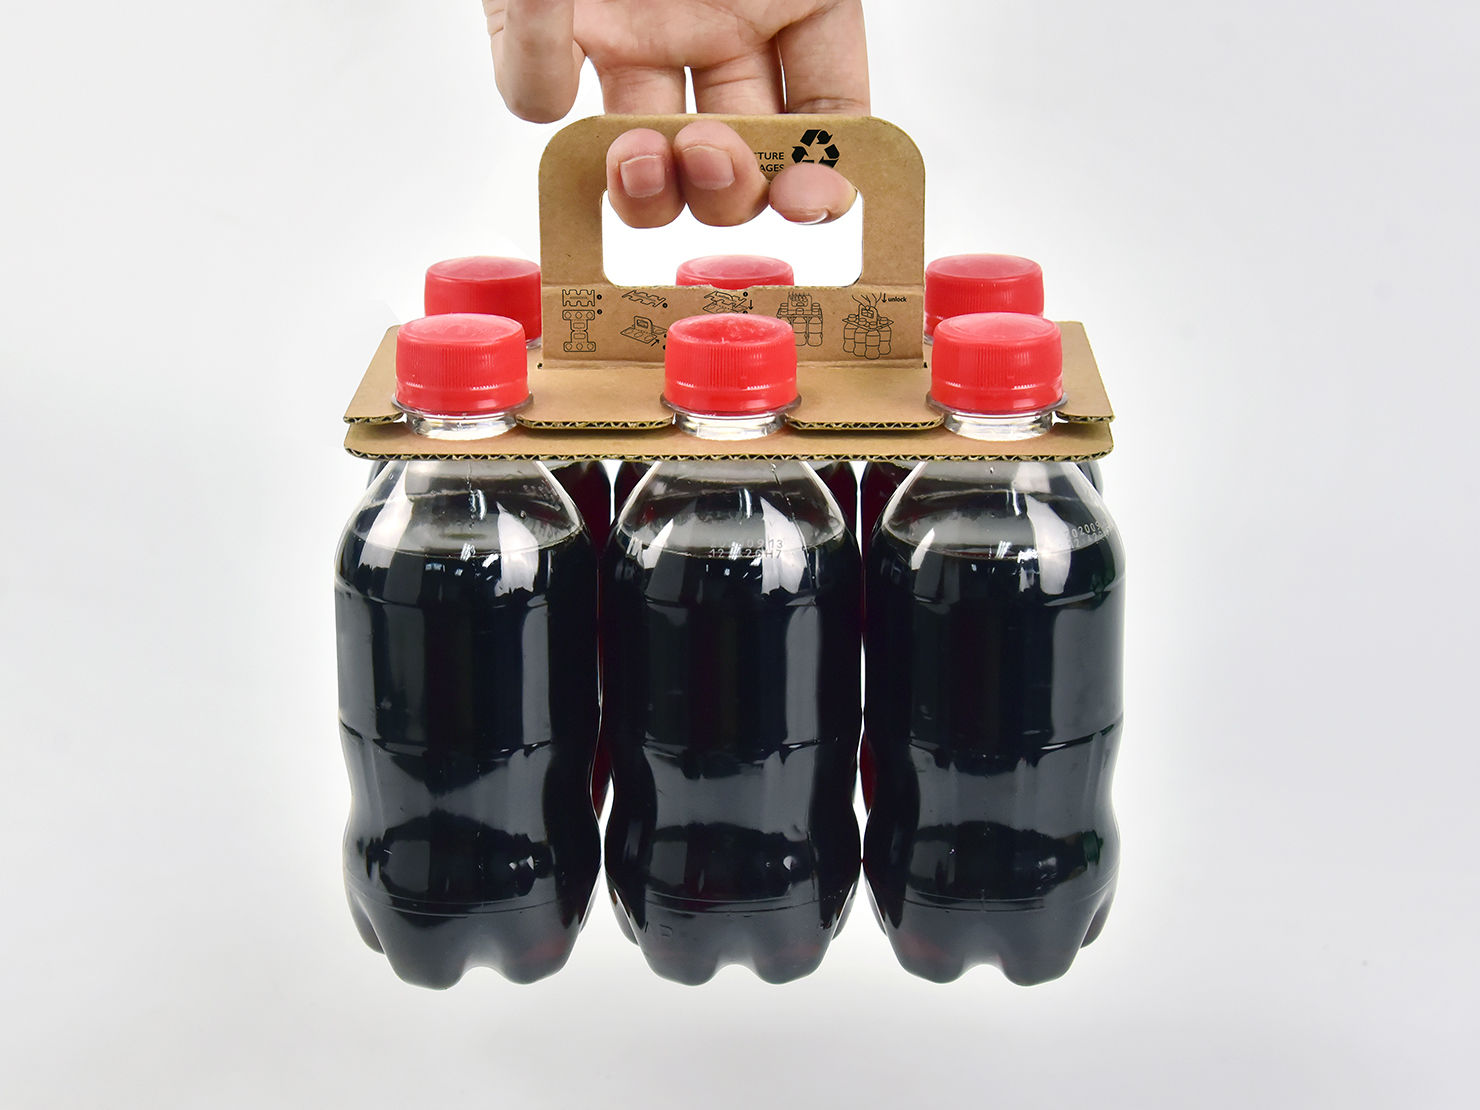 Packaging structure of bottled beverages